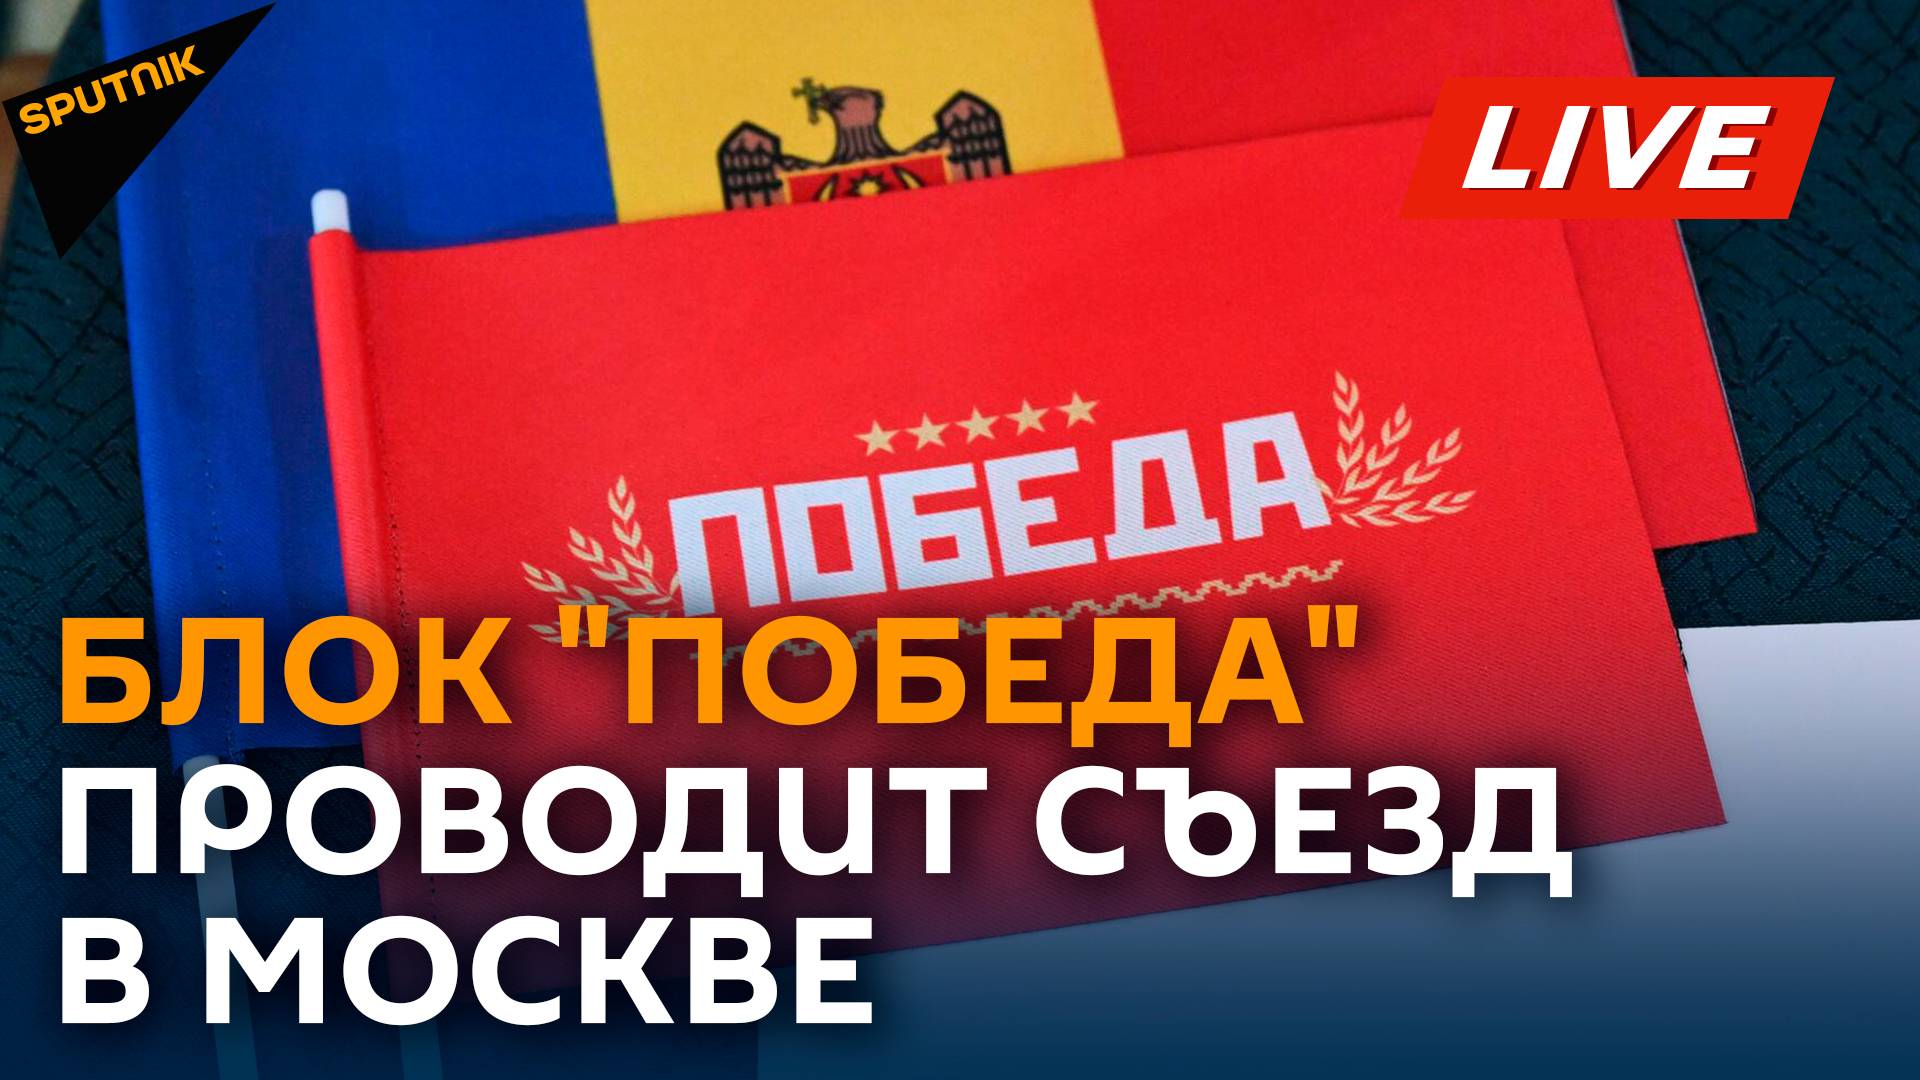 Блок "Победа" проводит съезд в Москве